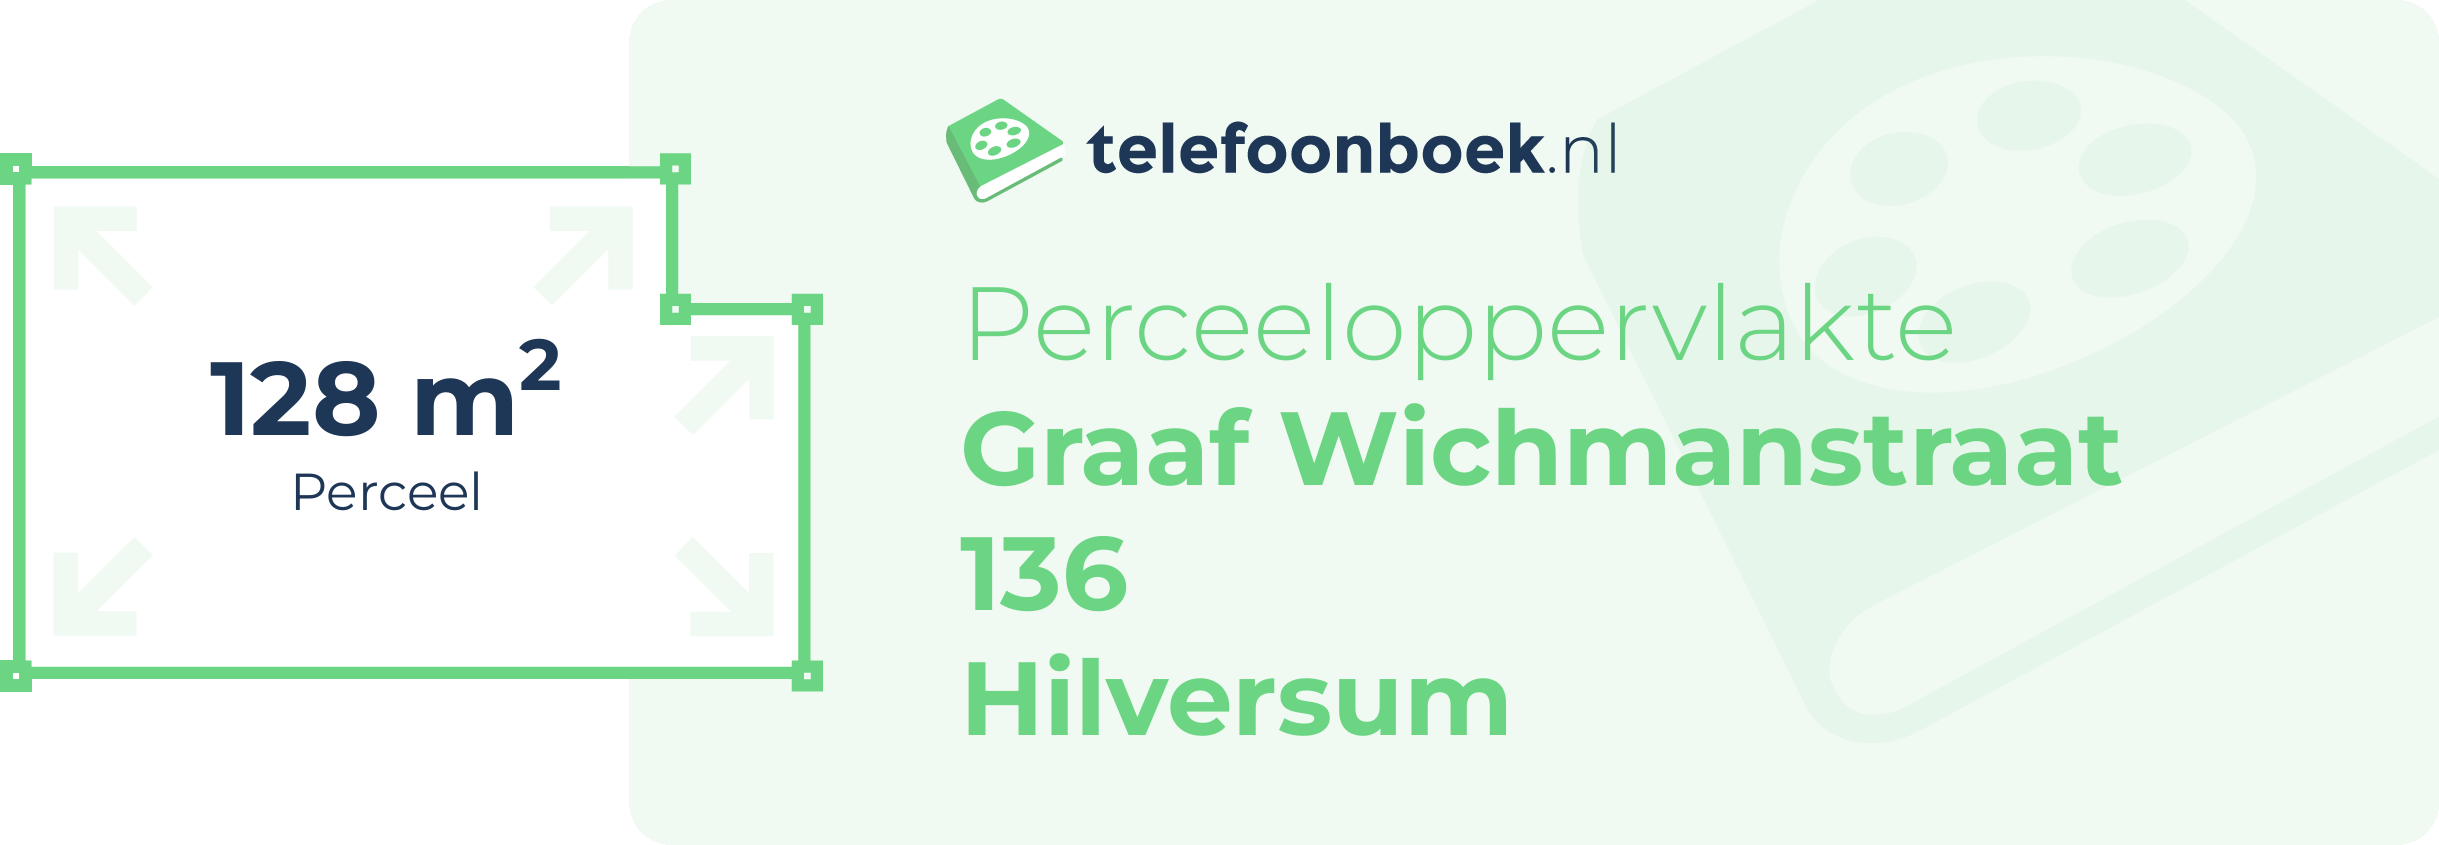 Perceeloppervlakte Graaf Wichmanstraat 136 Hilversum